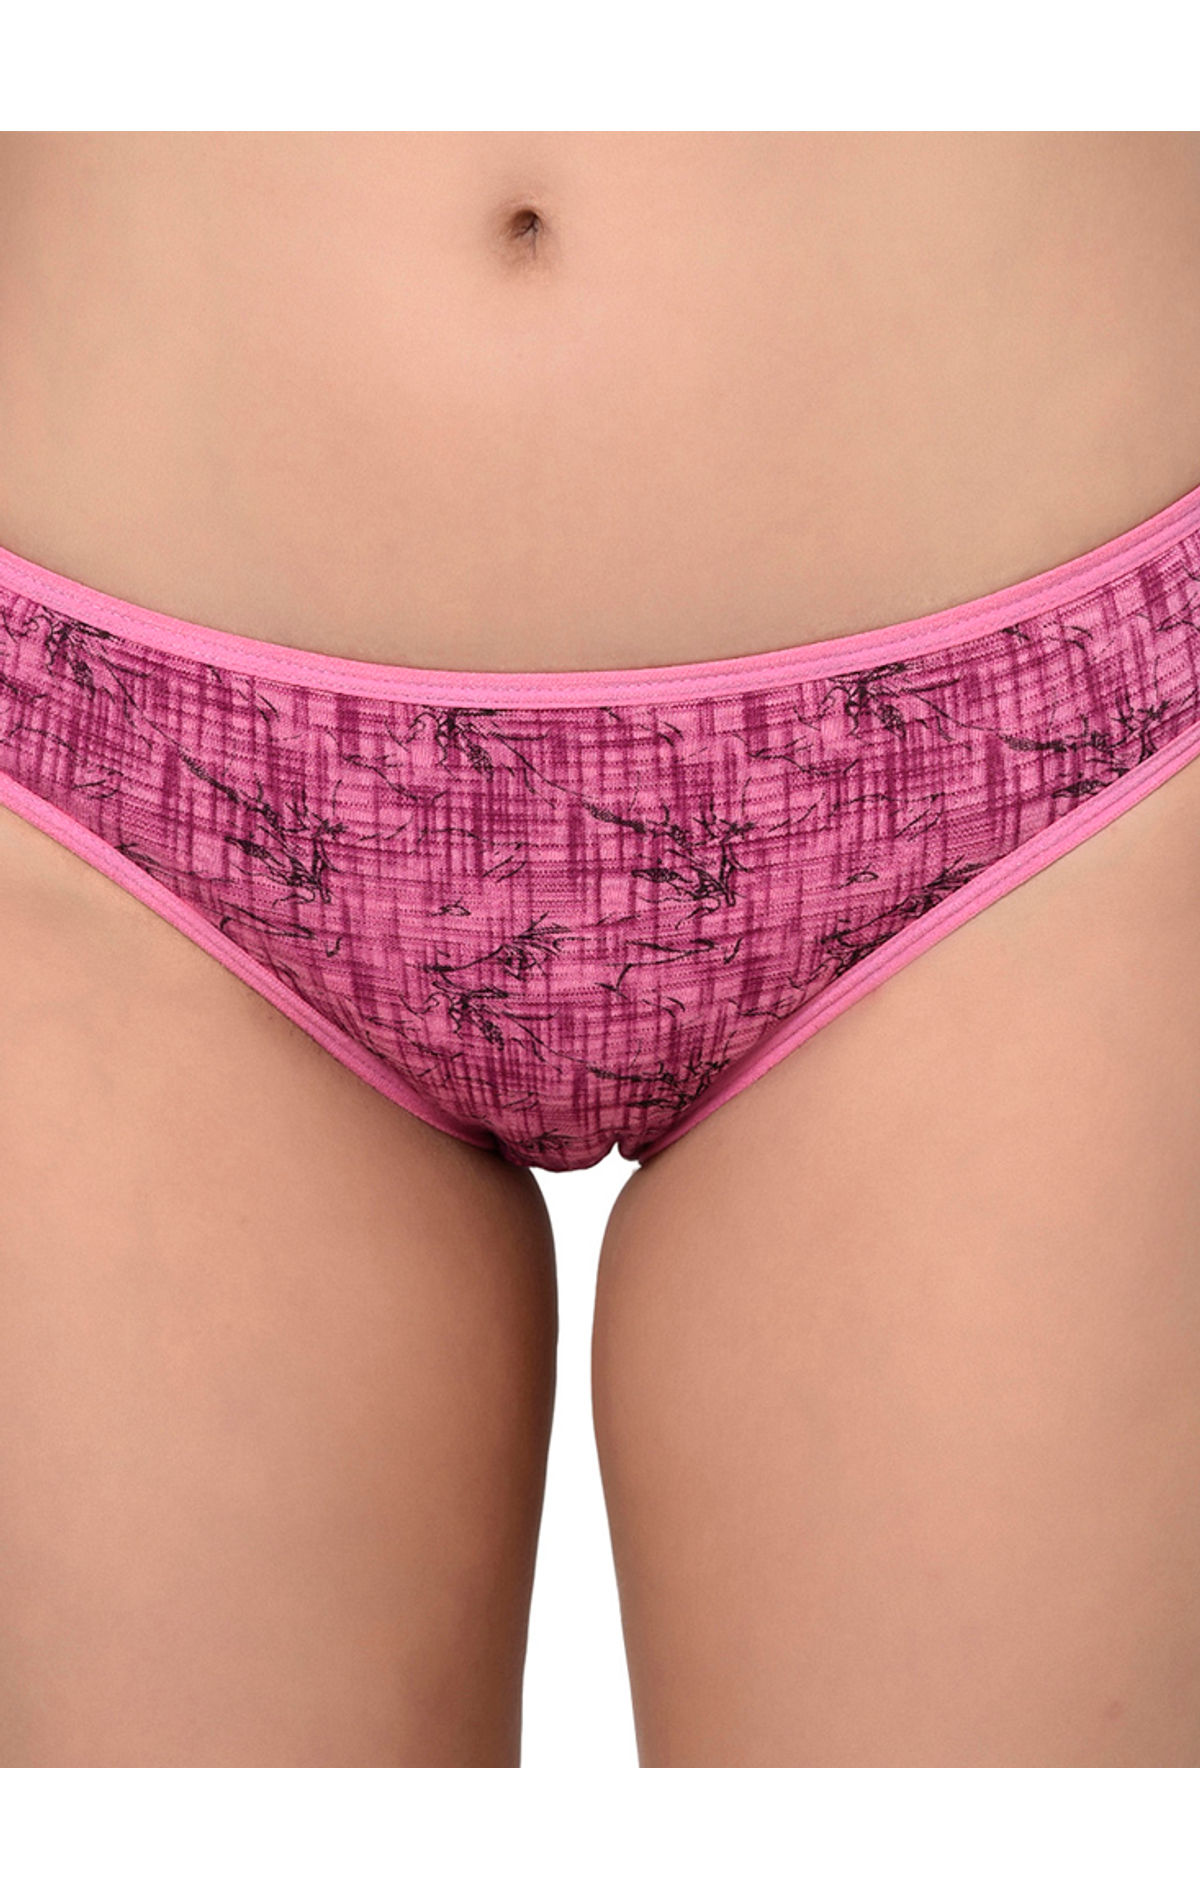 Bodycare Panties at Rs 340/set, Printed Panty in Along